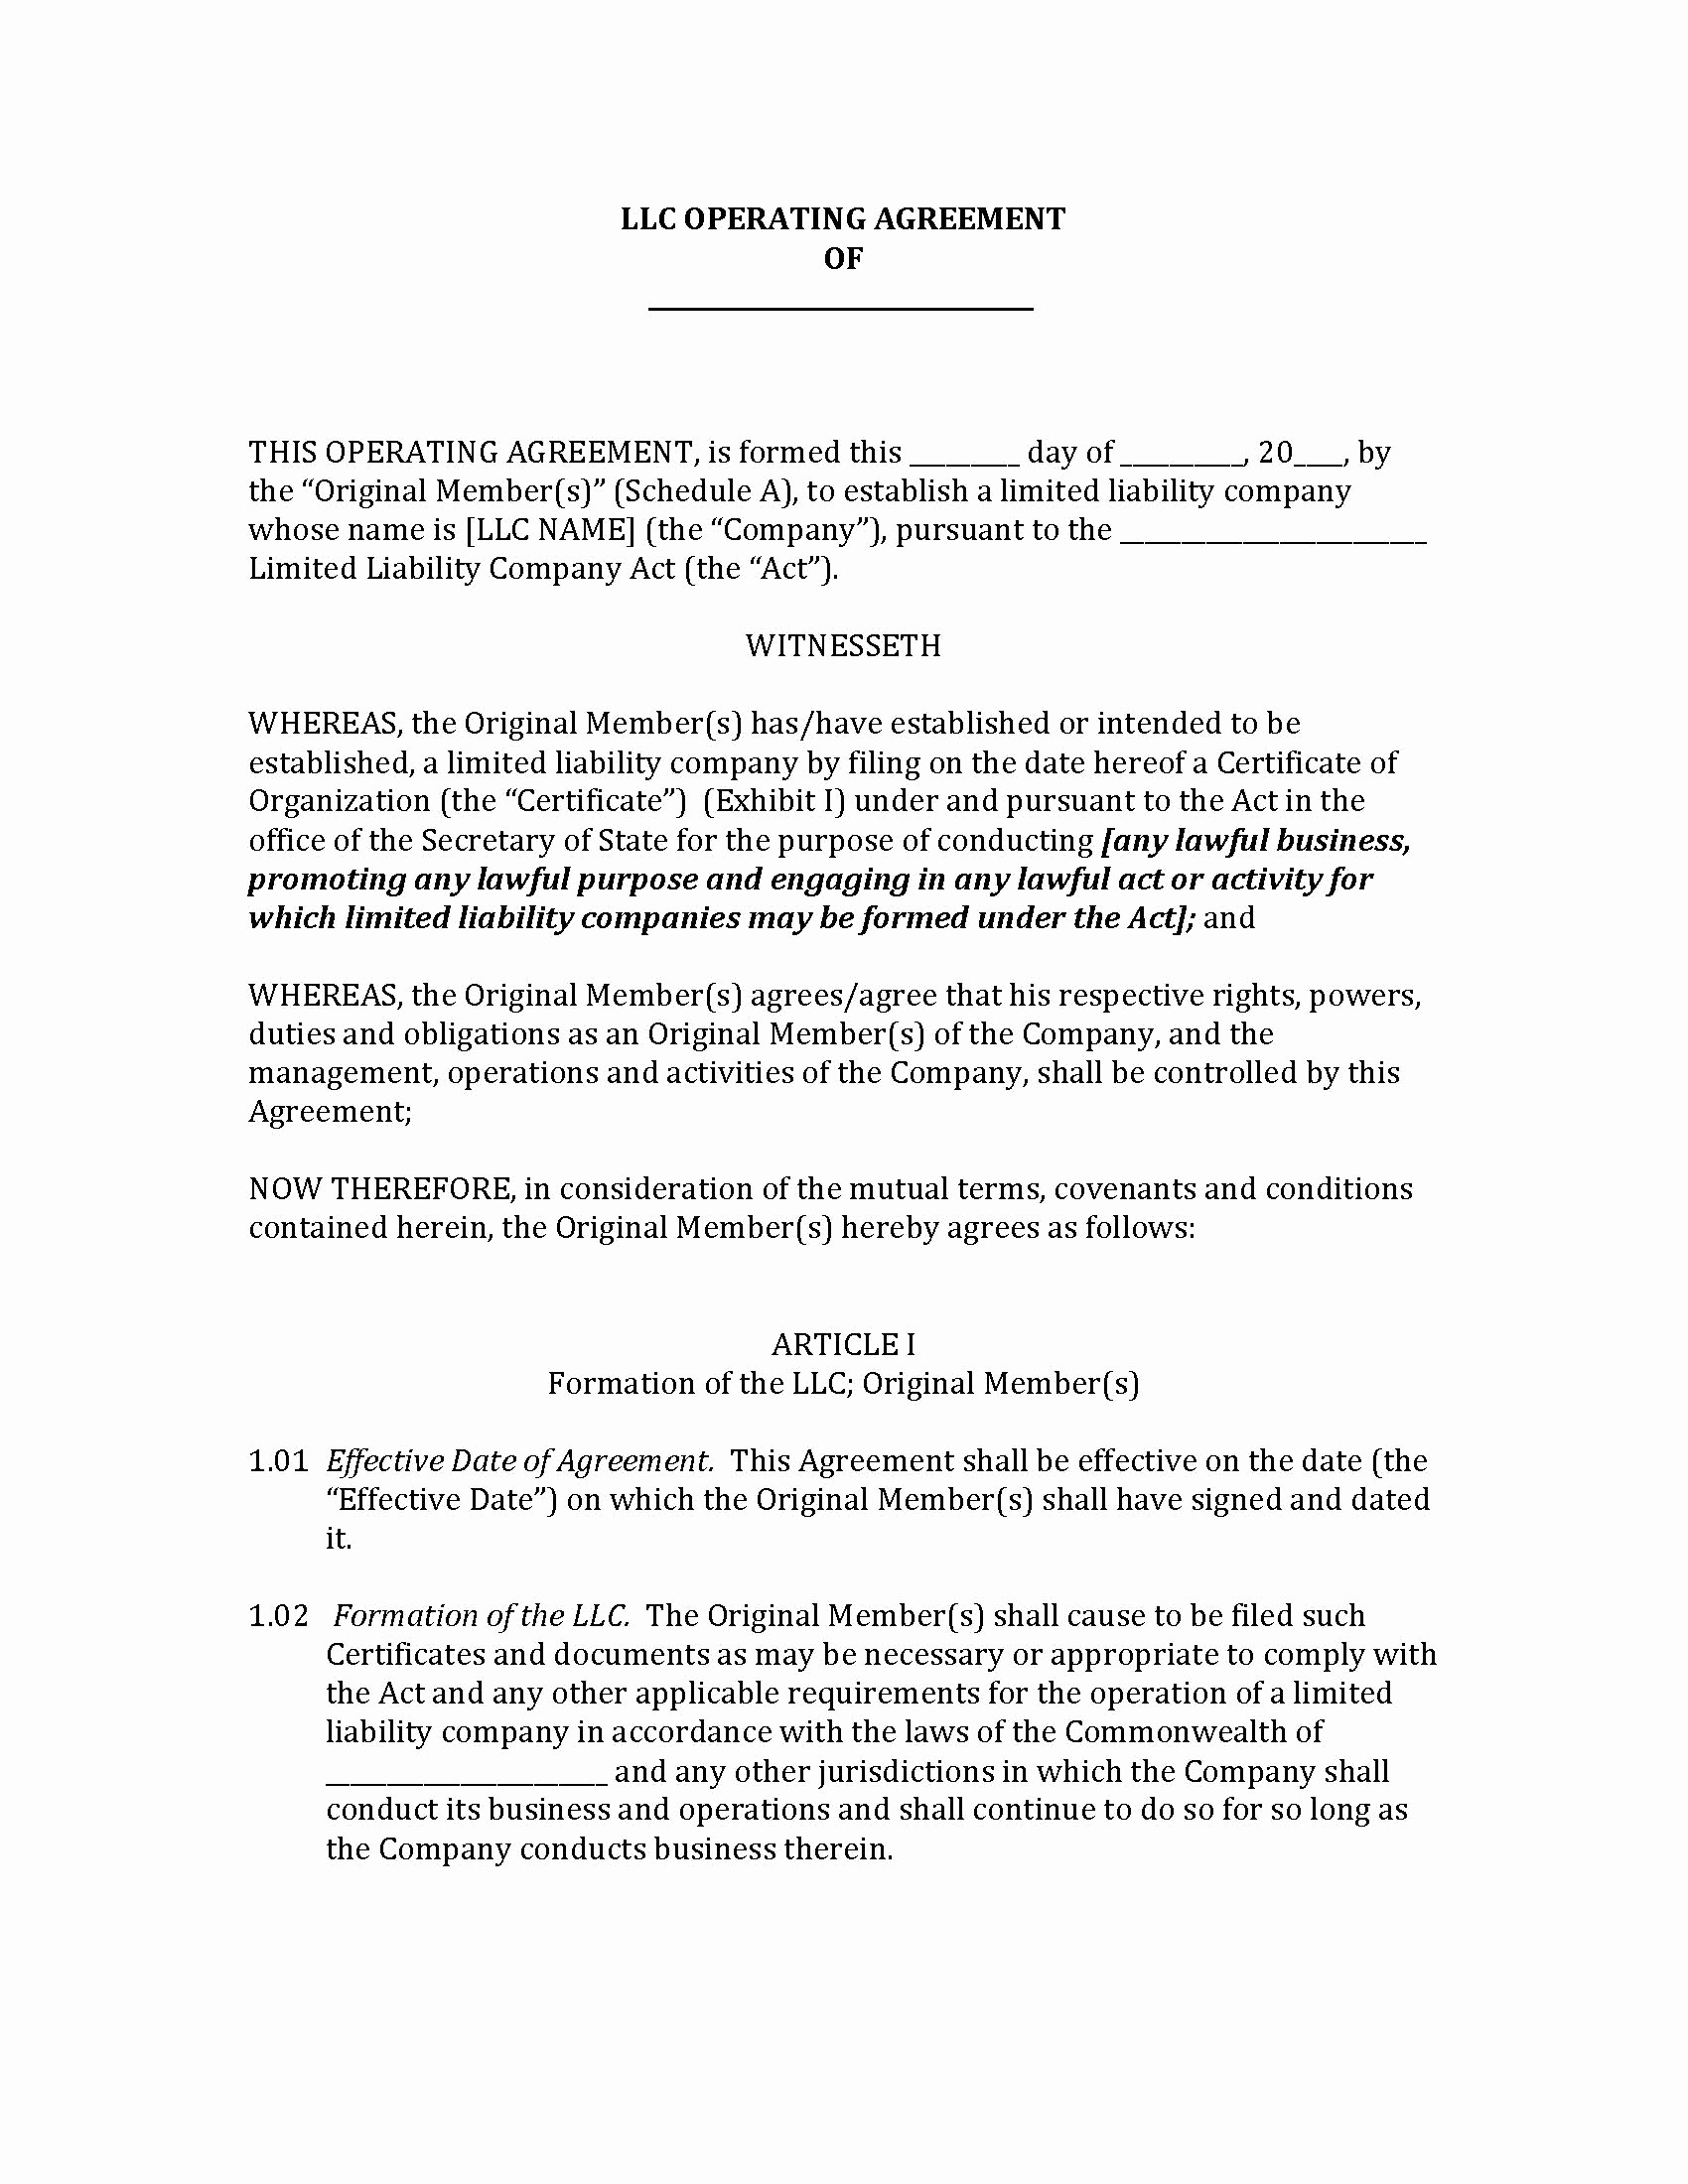 Illinois Llc Operating Agreement llc articles of organization 